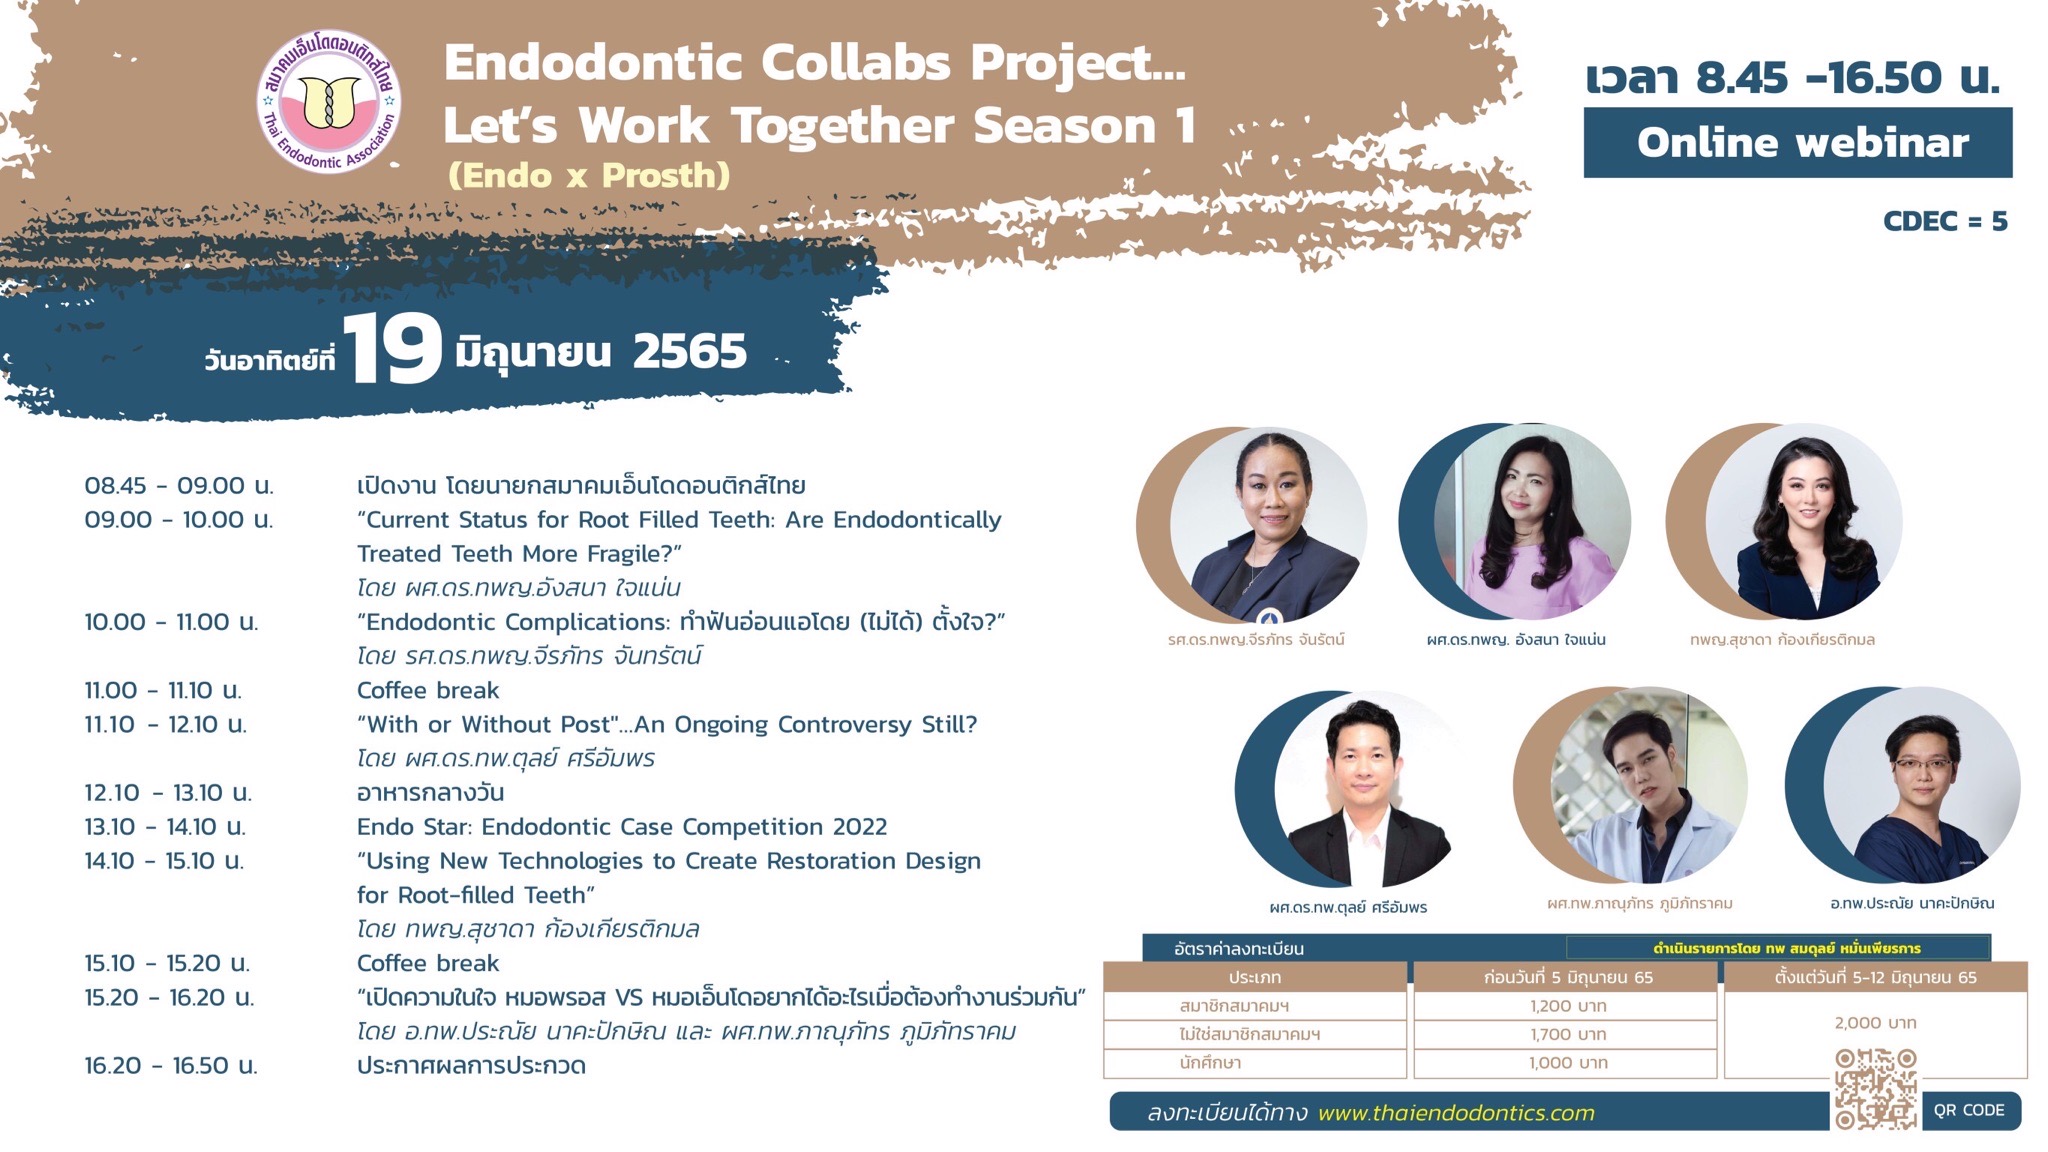 Endodontic Collabs Project...Thai Endodontic Association Let's Work Together Season 1(Endo x Prosth)